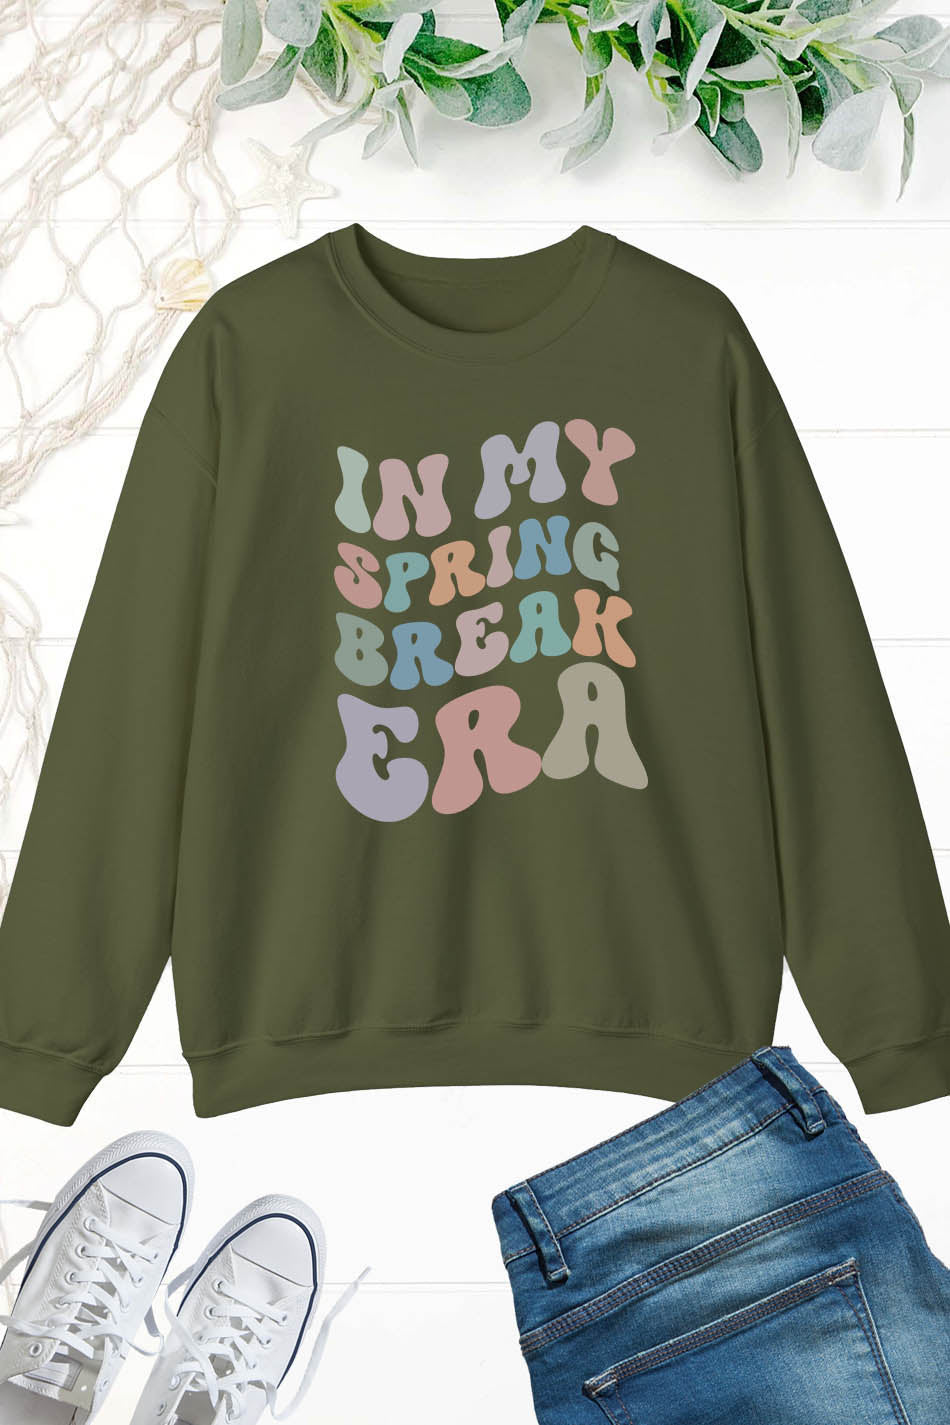 In My Spring Break Era Sweatshirts